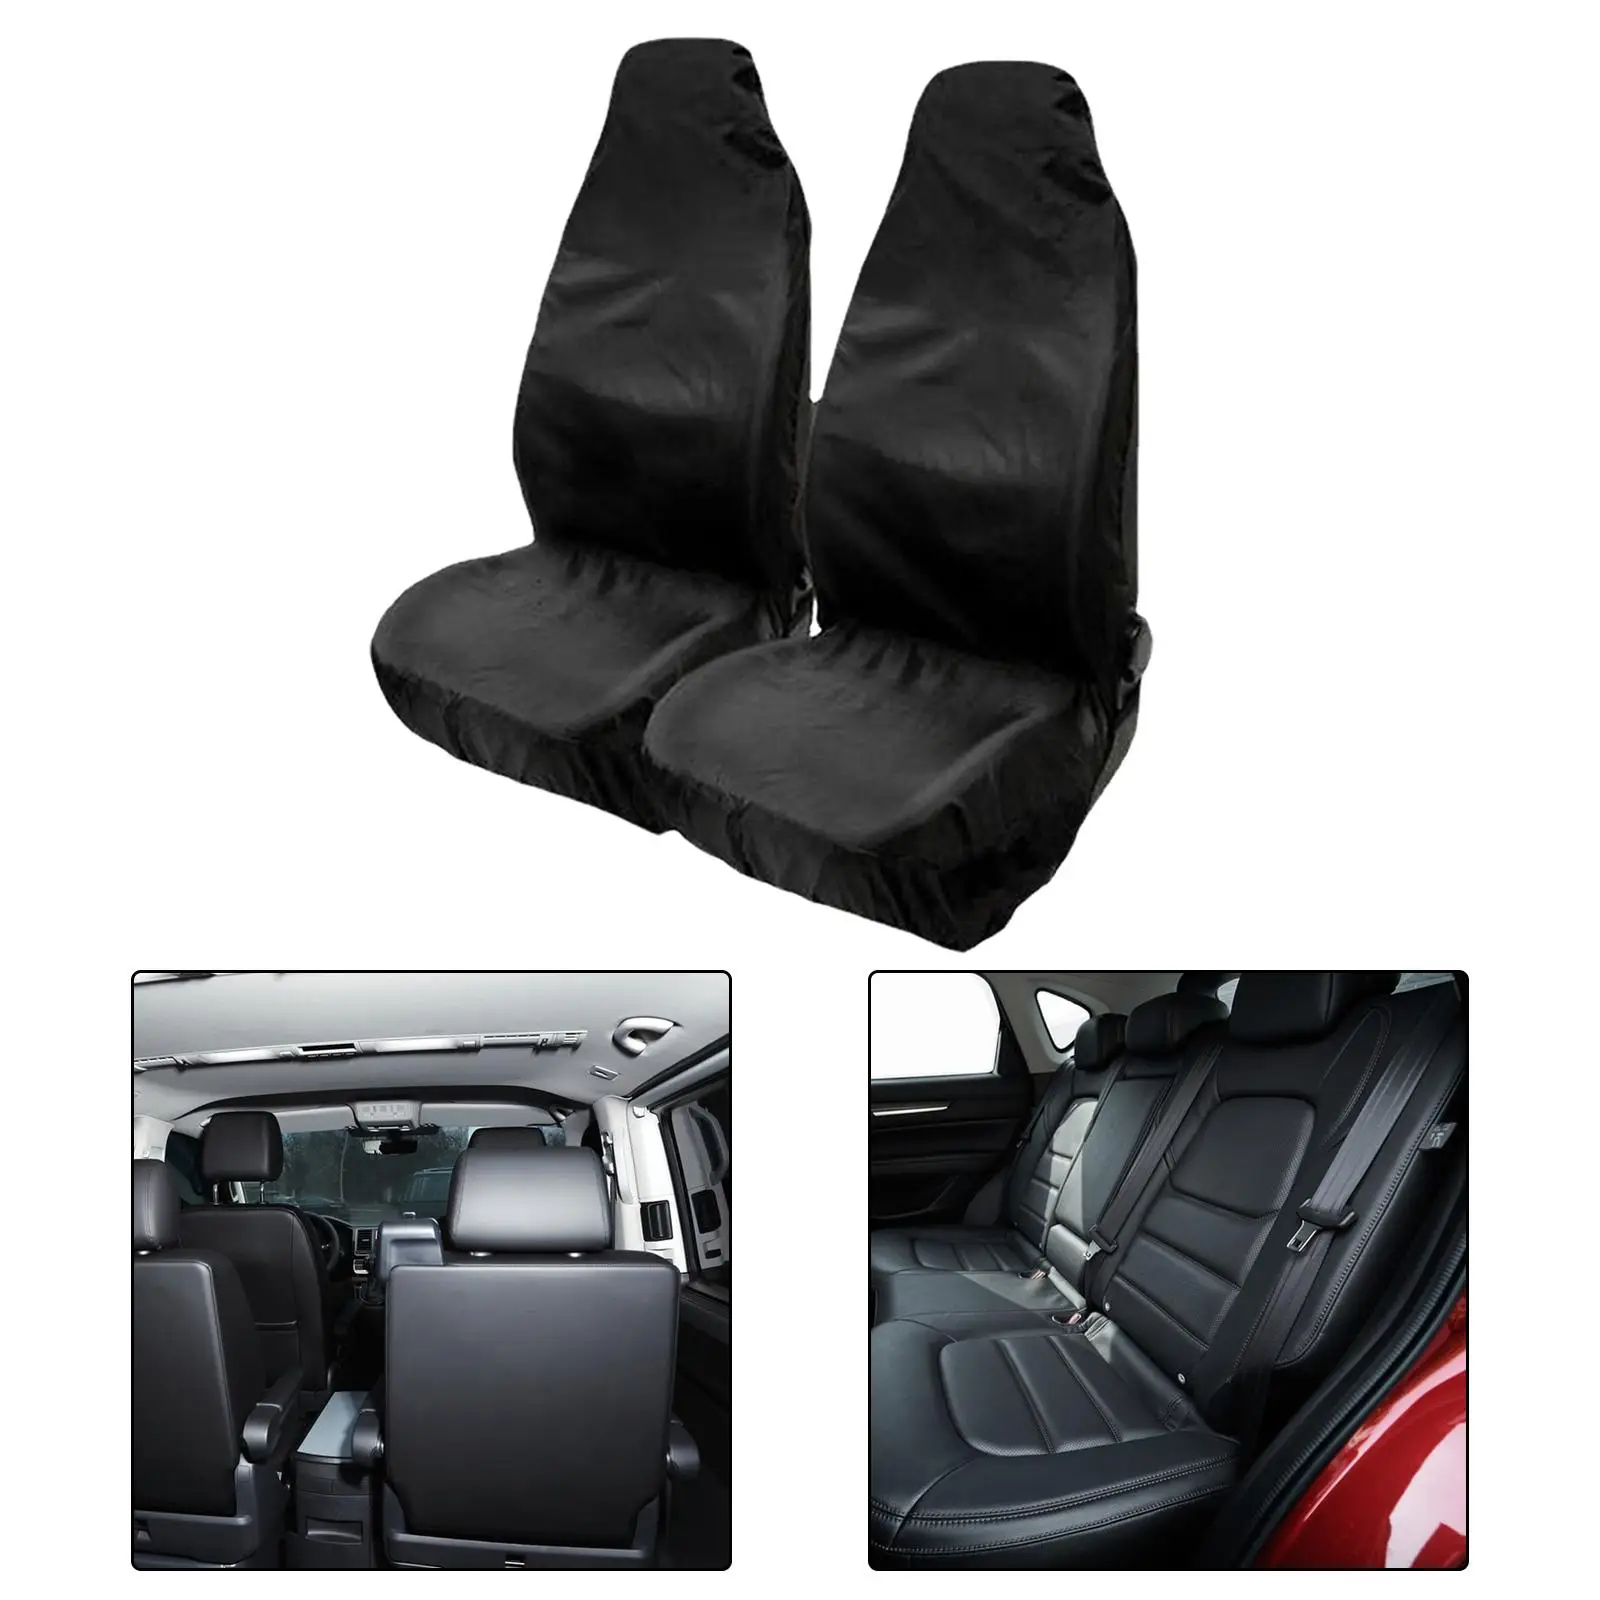 2x אוטומטי כיסוי מושב סט כרית מושב מכסים עם שקית אחסון Dustproof קל להגנה כיסוי מושב מגן עבור רכב שטח - 4